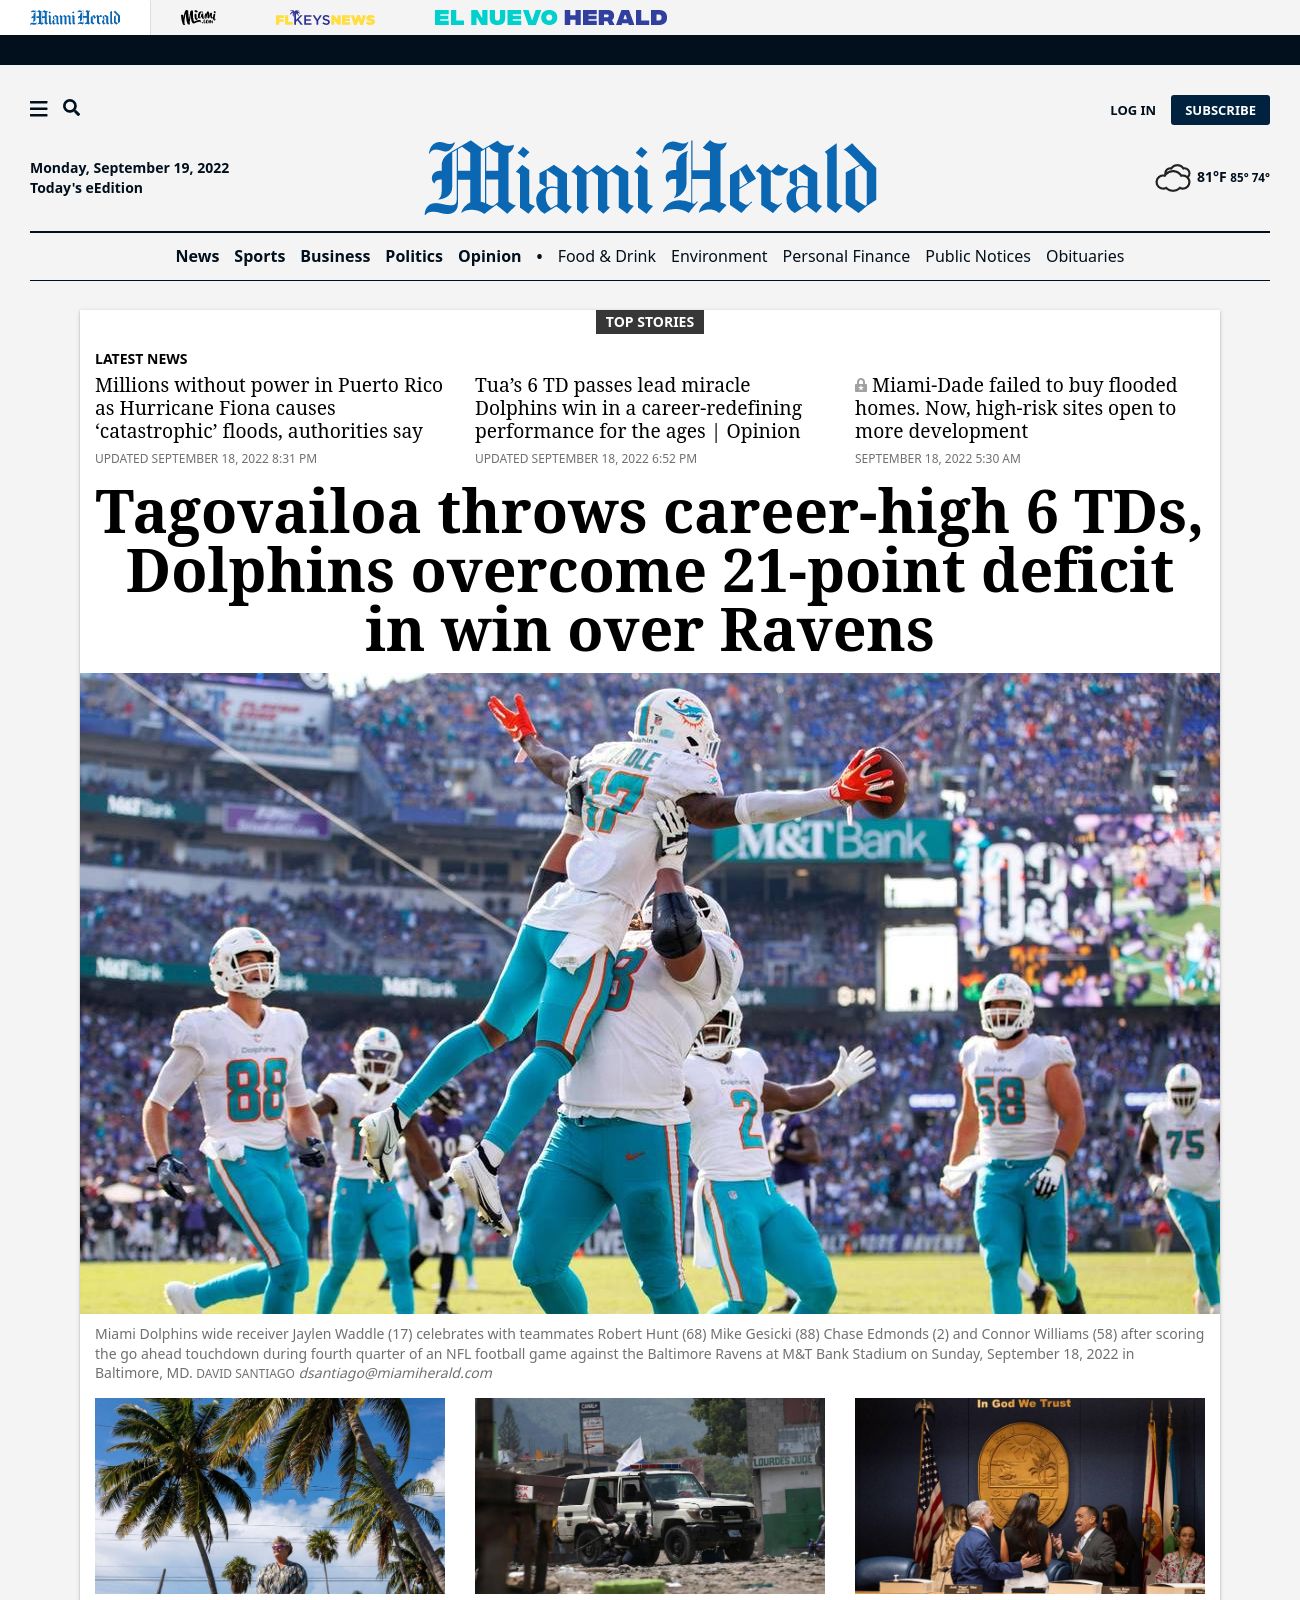 Miami Herald at 2022-09-18 21:12:26-04:00 local time